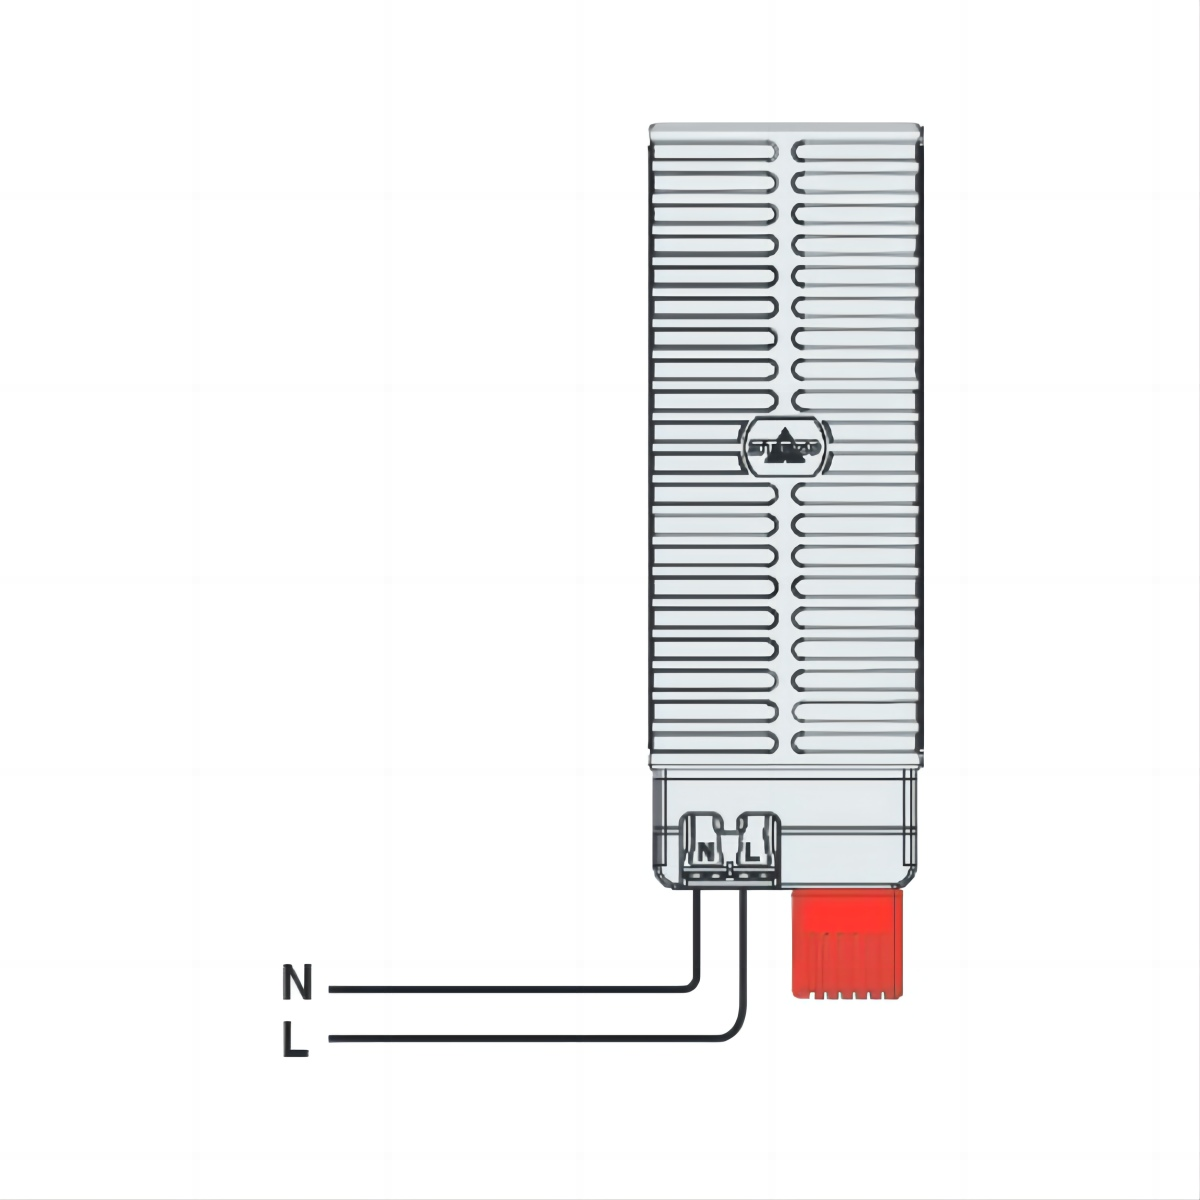 ltf065-enclosure-heater-wiring-diagram.png